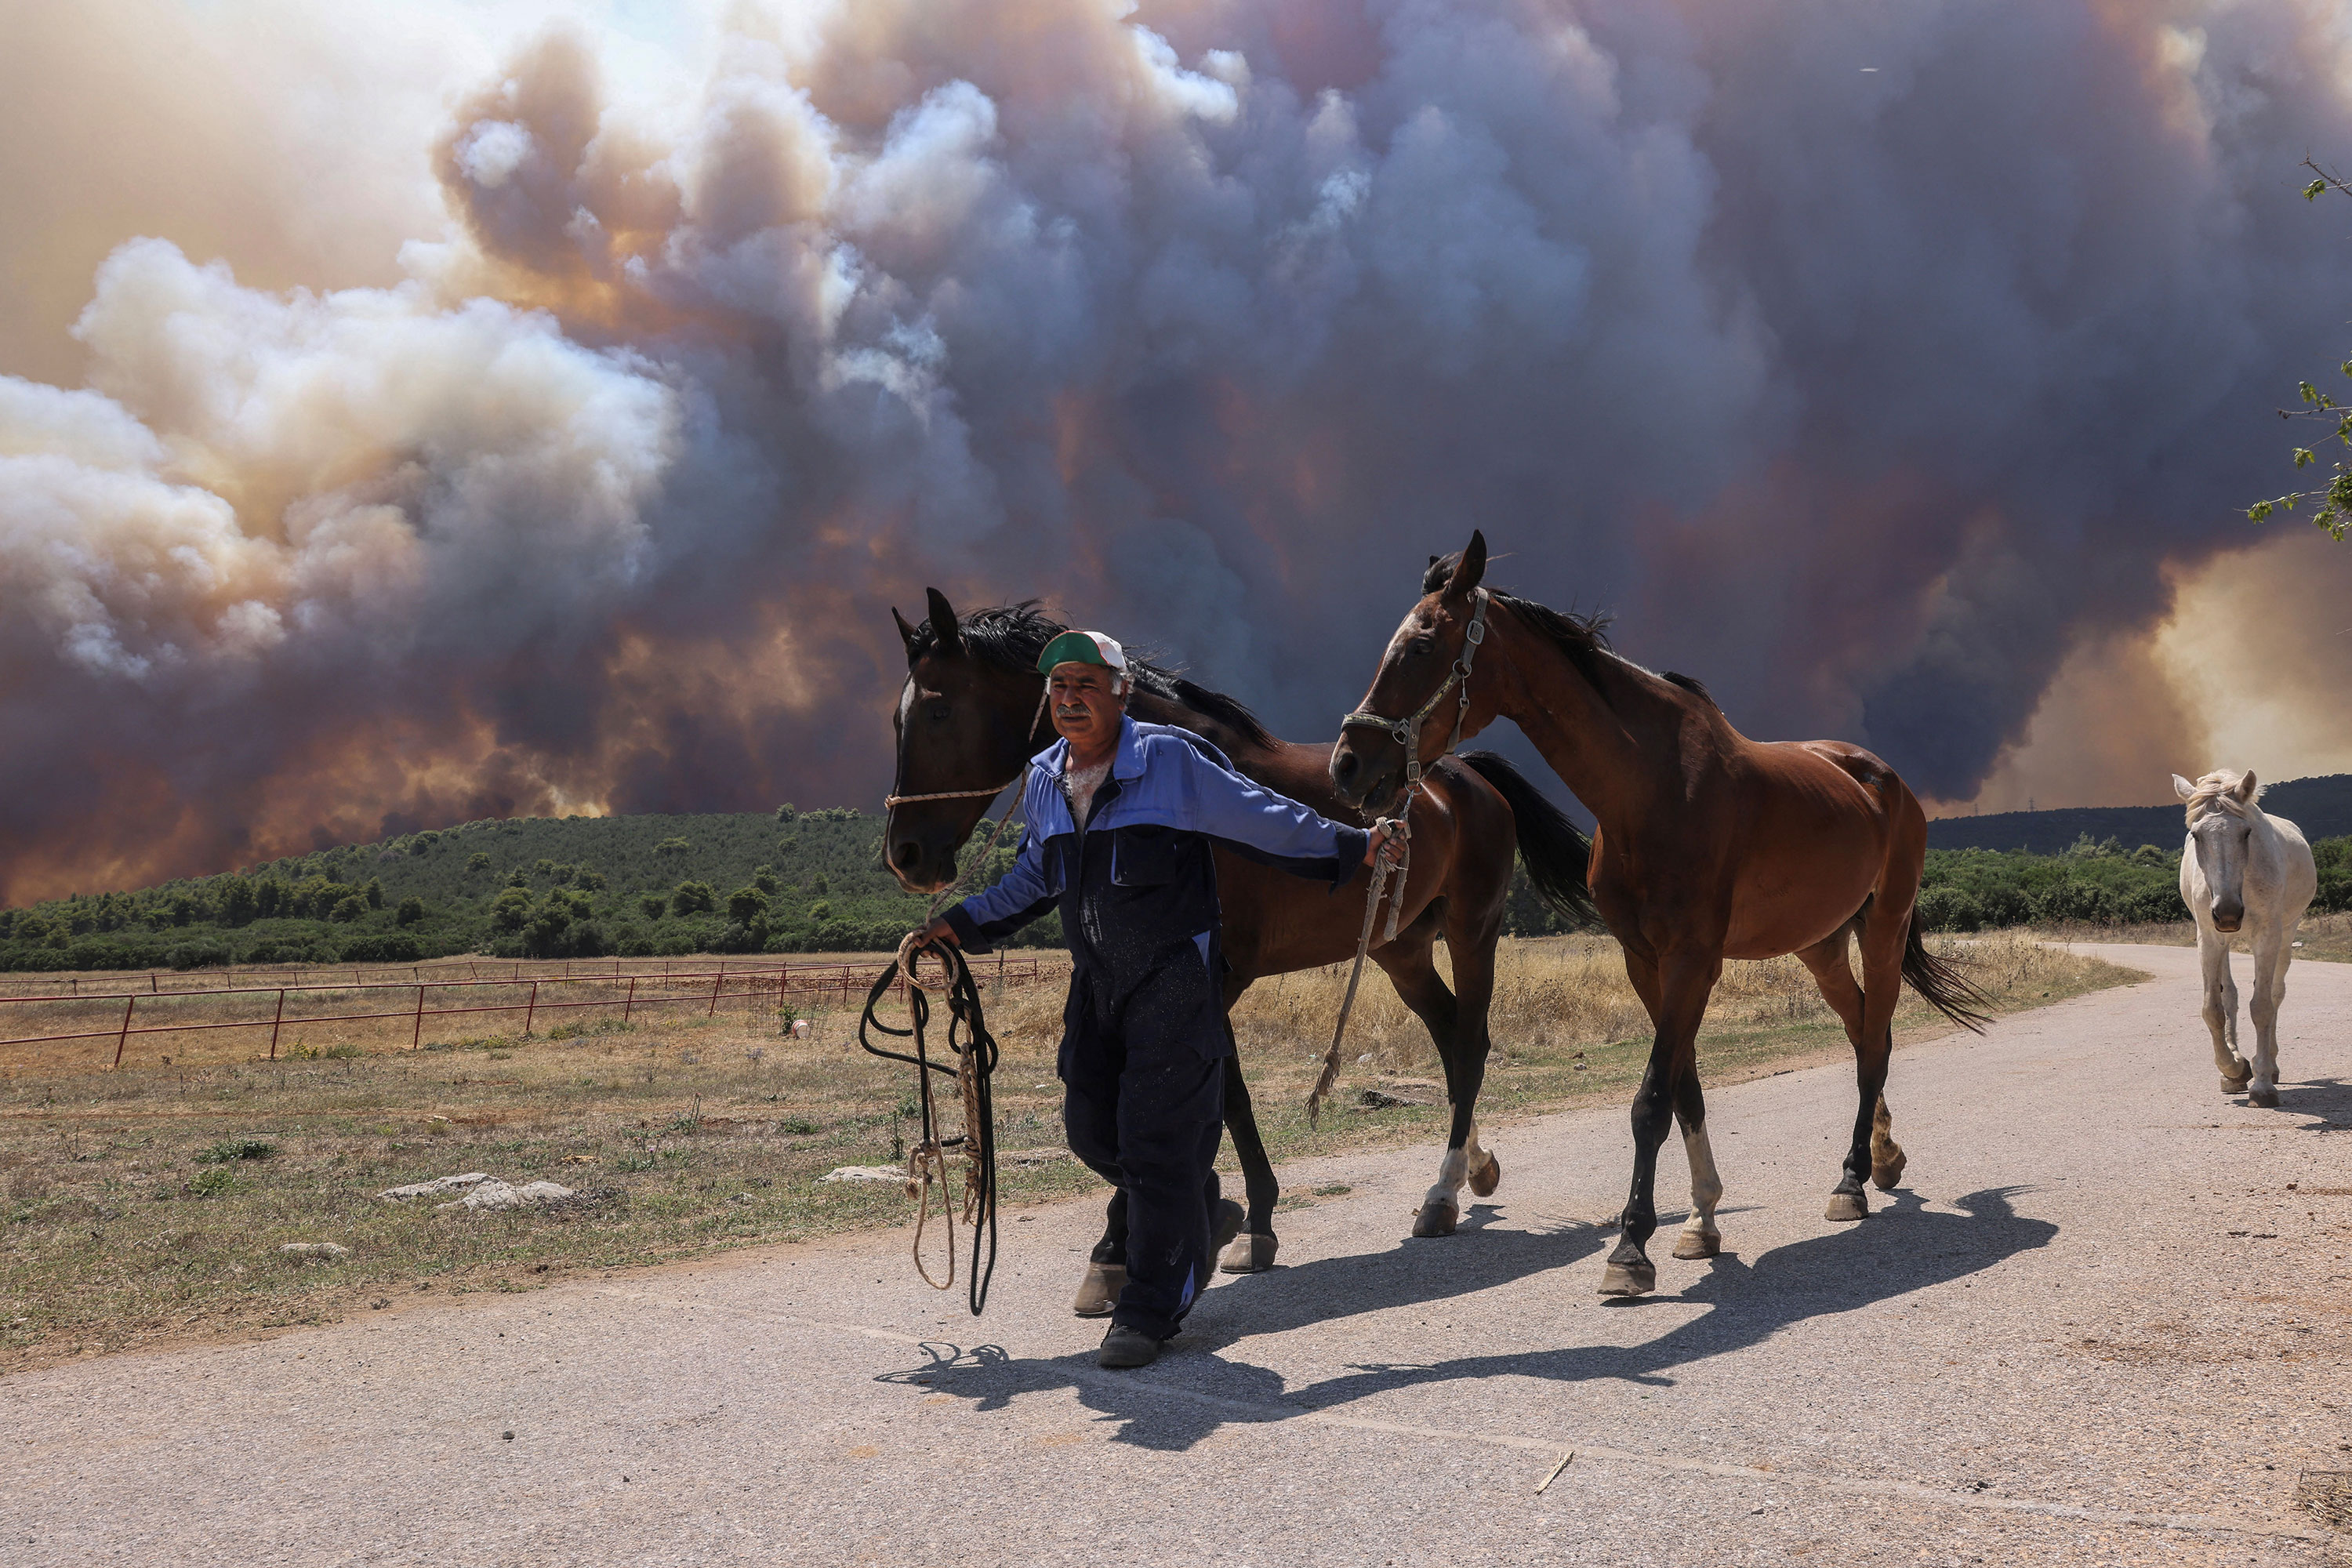 A man evacuates horses as a wildfire burns near the village of Pournari, Greece, on Tuesday.